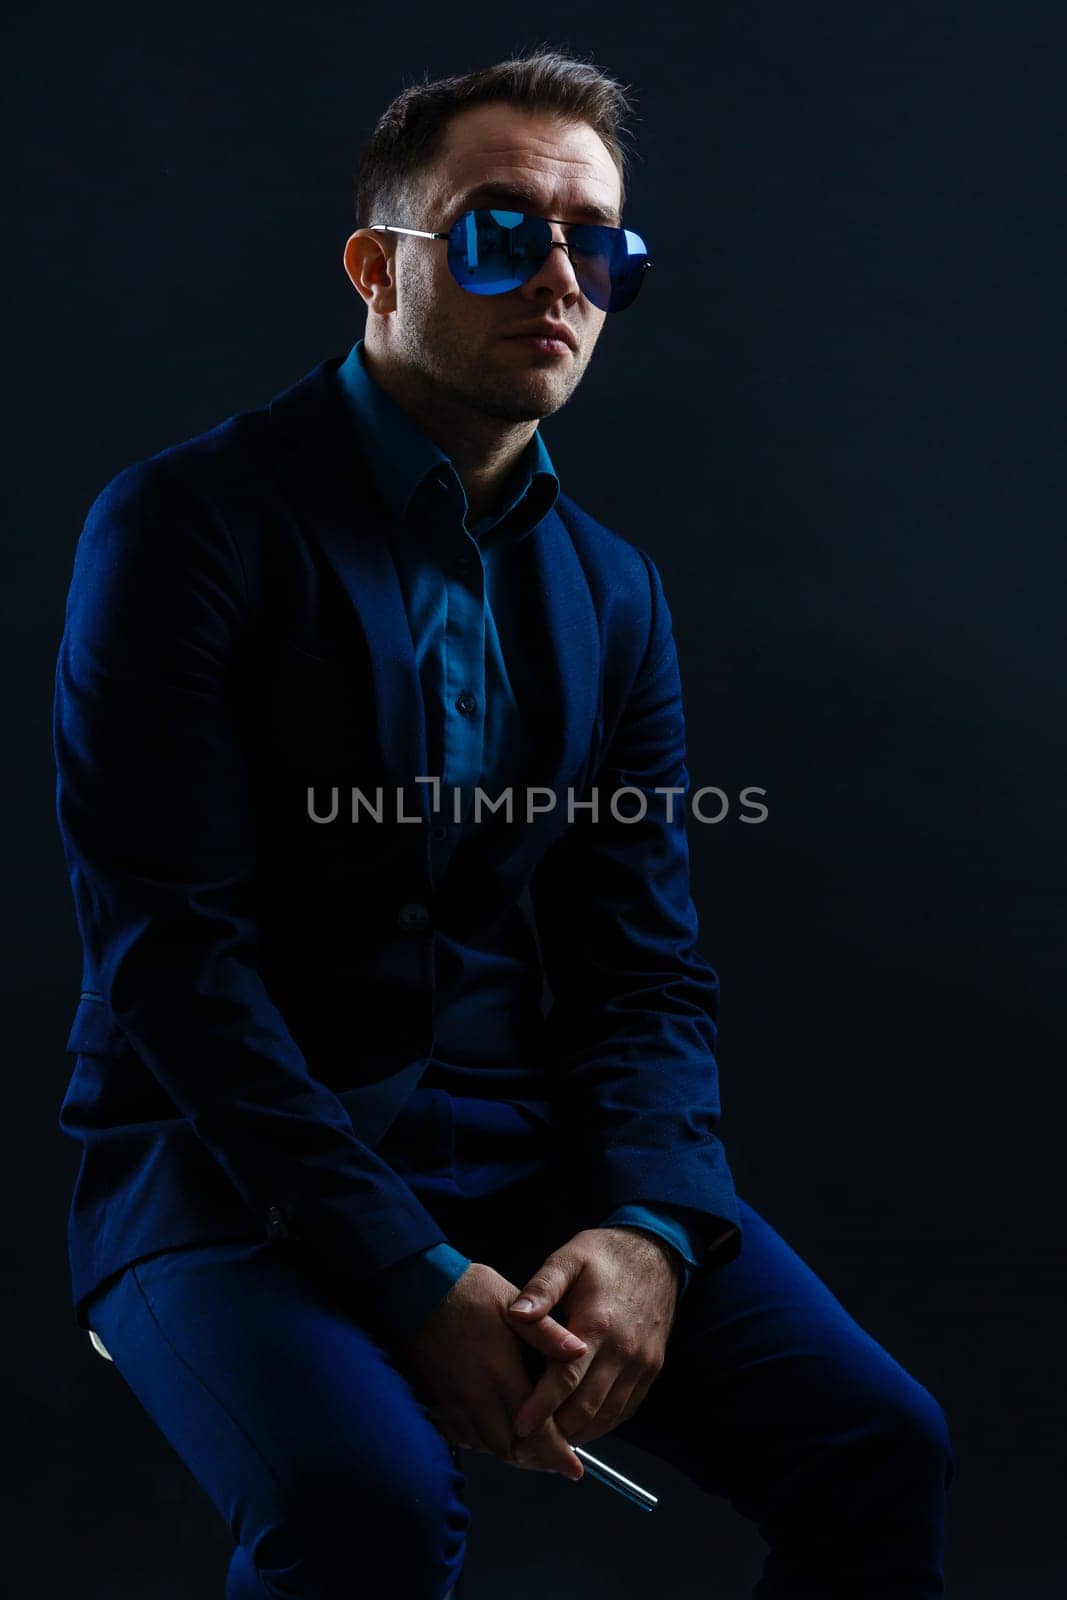 businessmen modern style suit fashion sunglasses dark background. by Andelov13